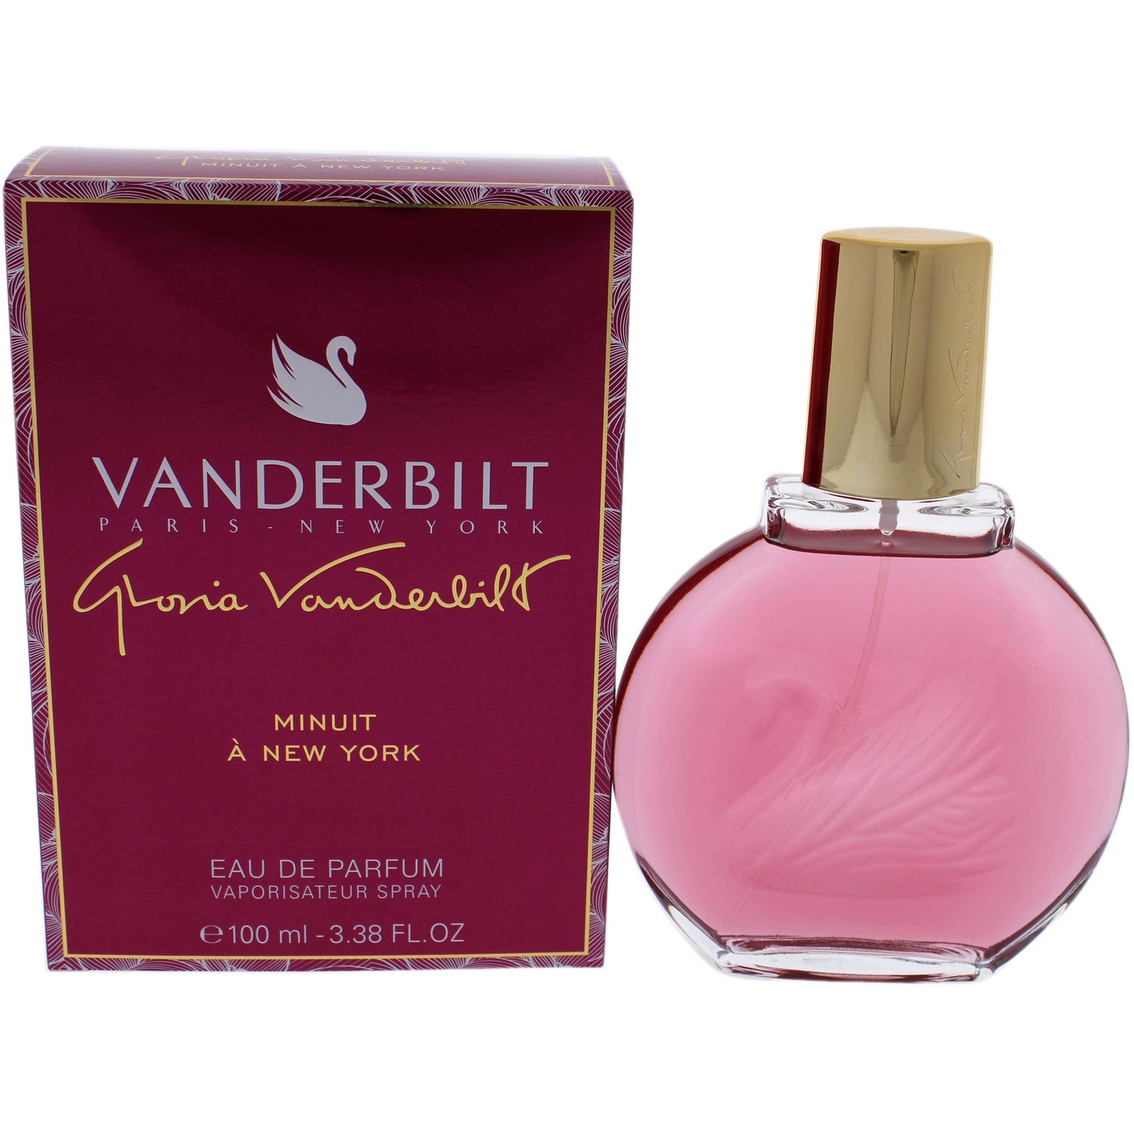 Gloria Vanderbilt Minuit a New York Eau de Parfum Spray - Image 2 of 2